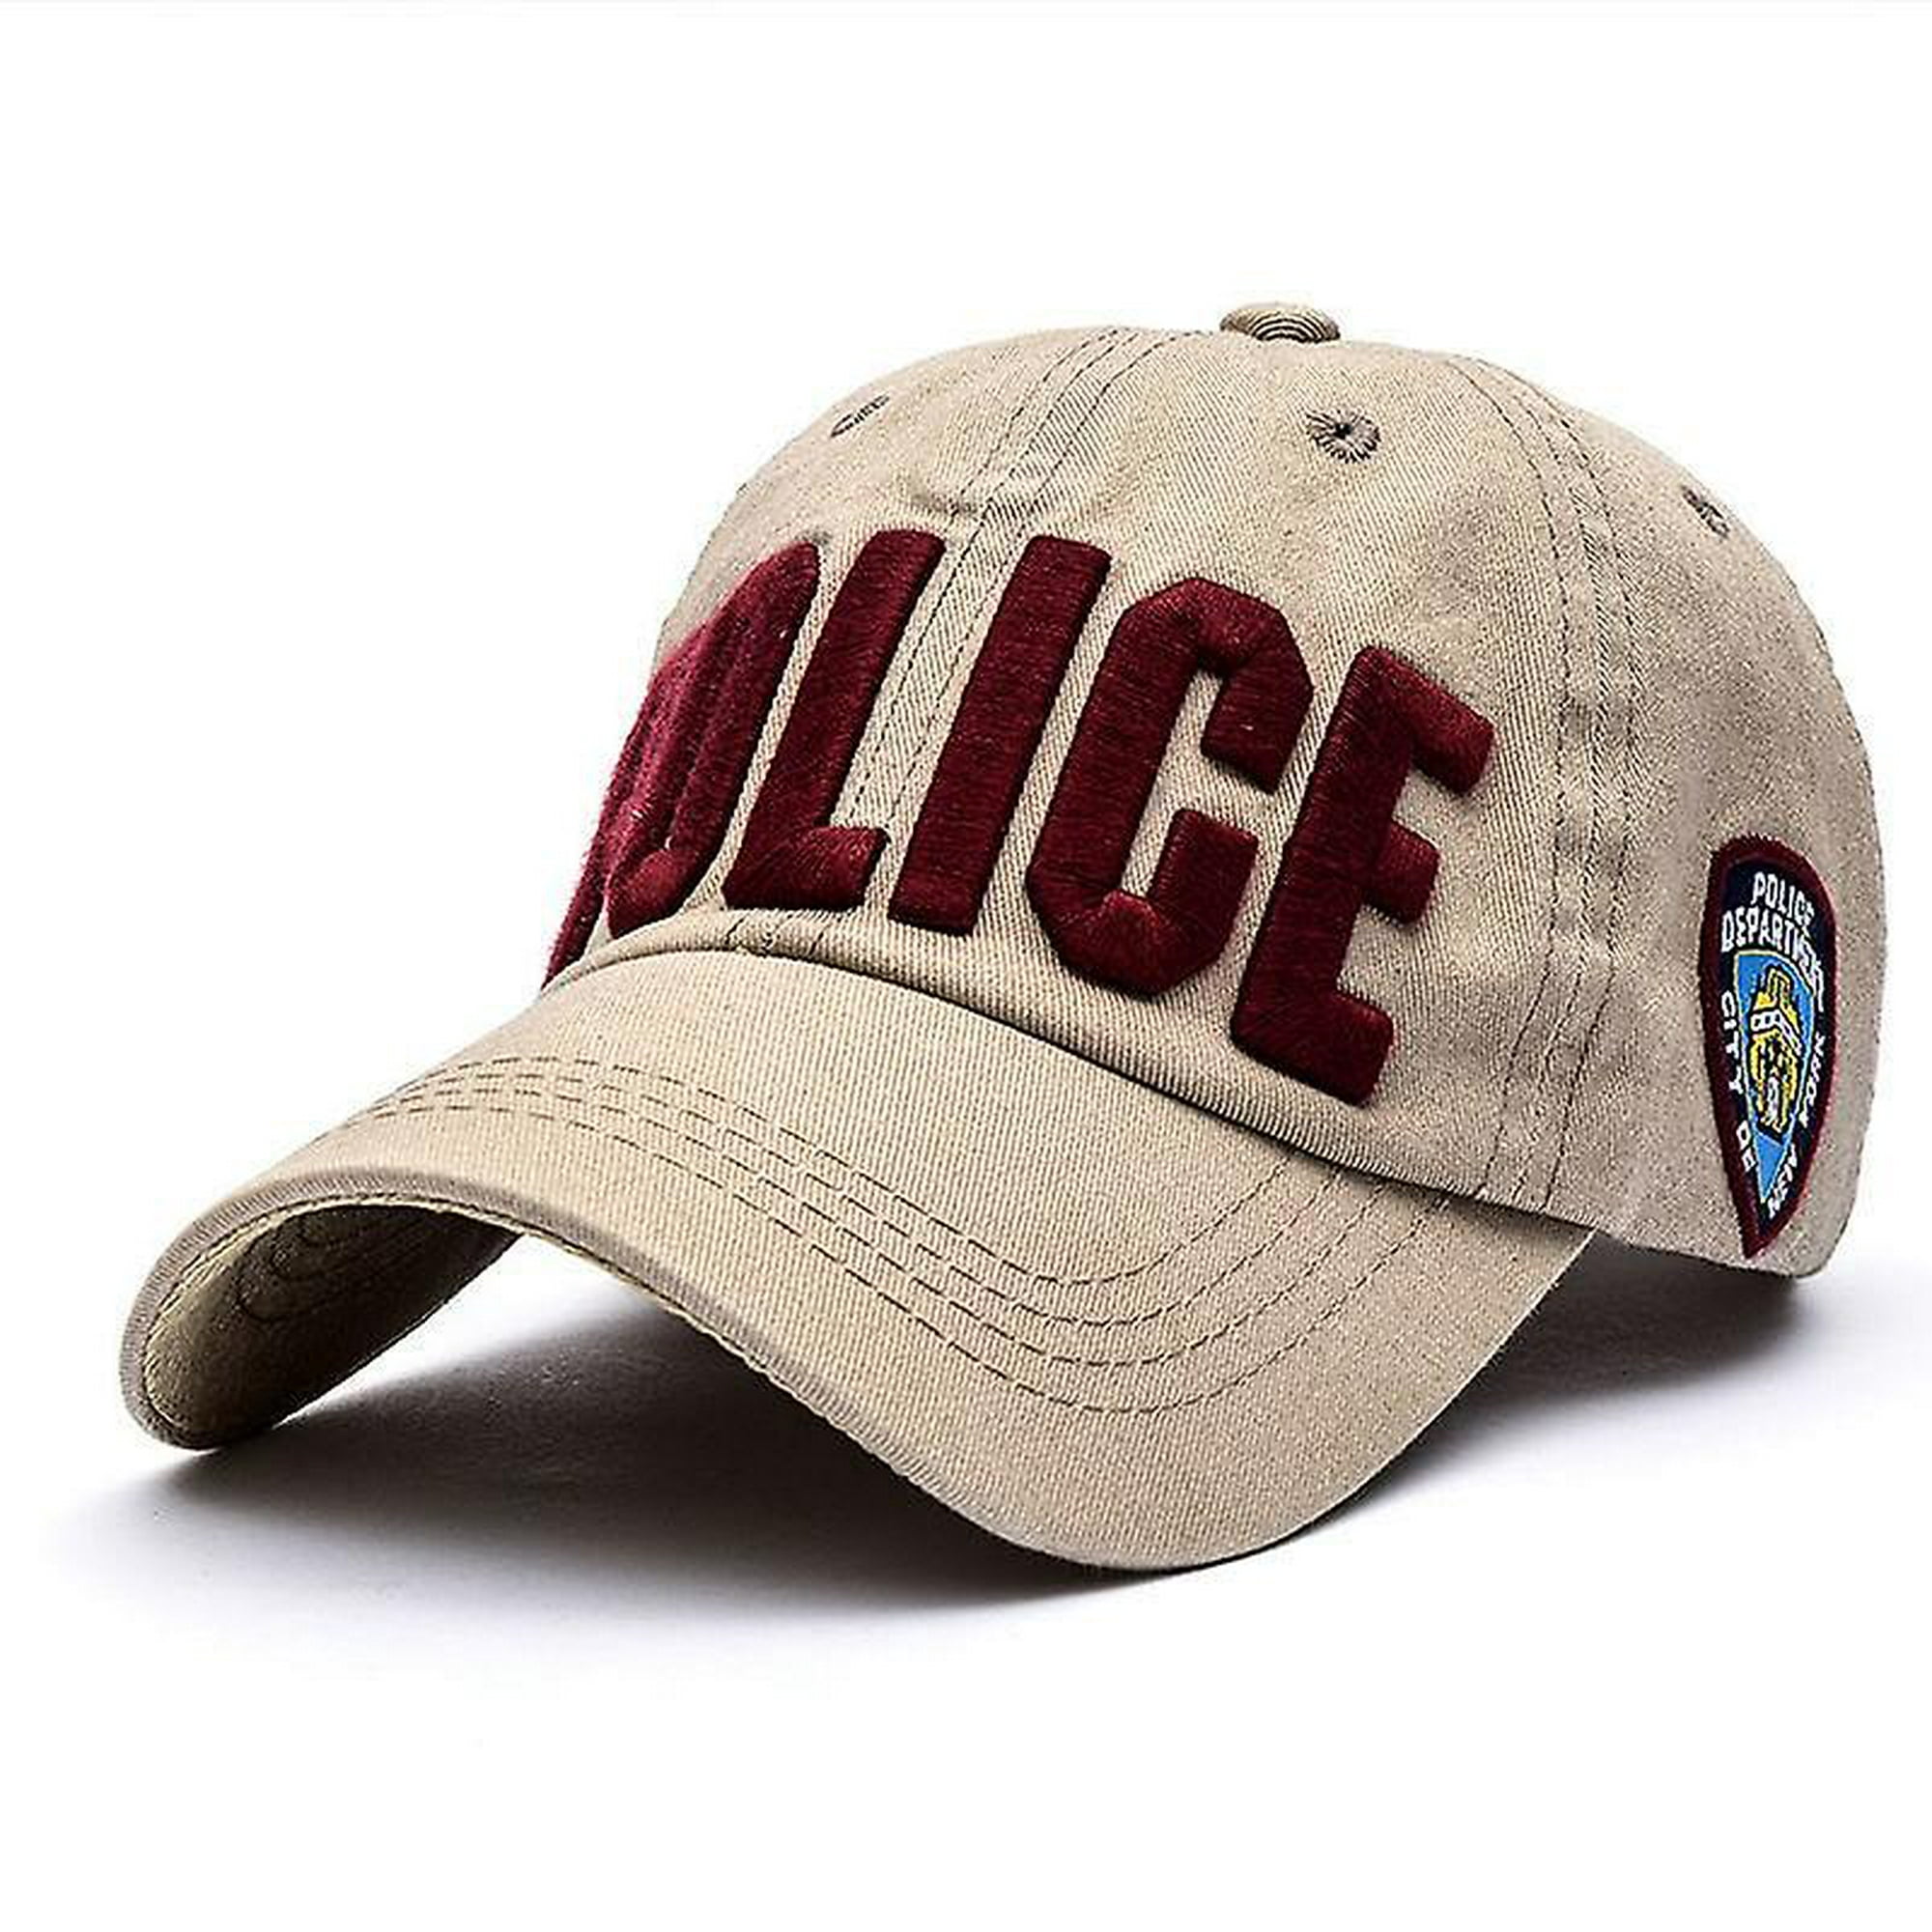 Gorra de béisbol - Departamento de Policía de Nueva York, azul marino